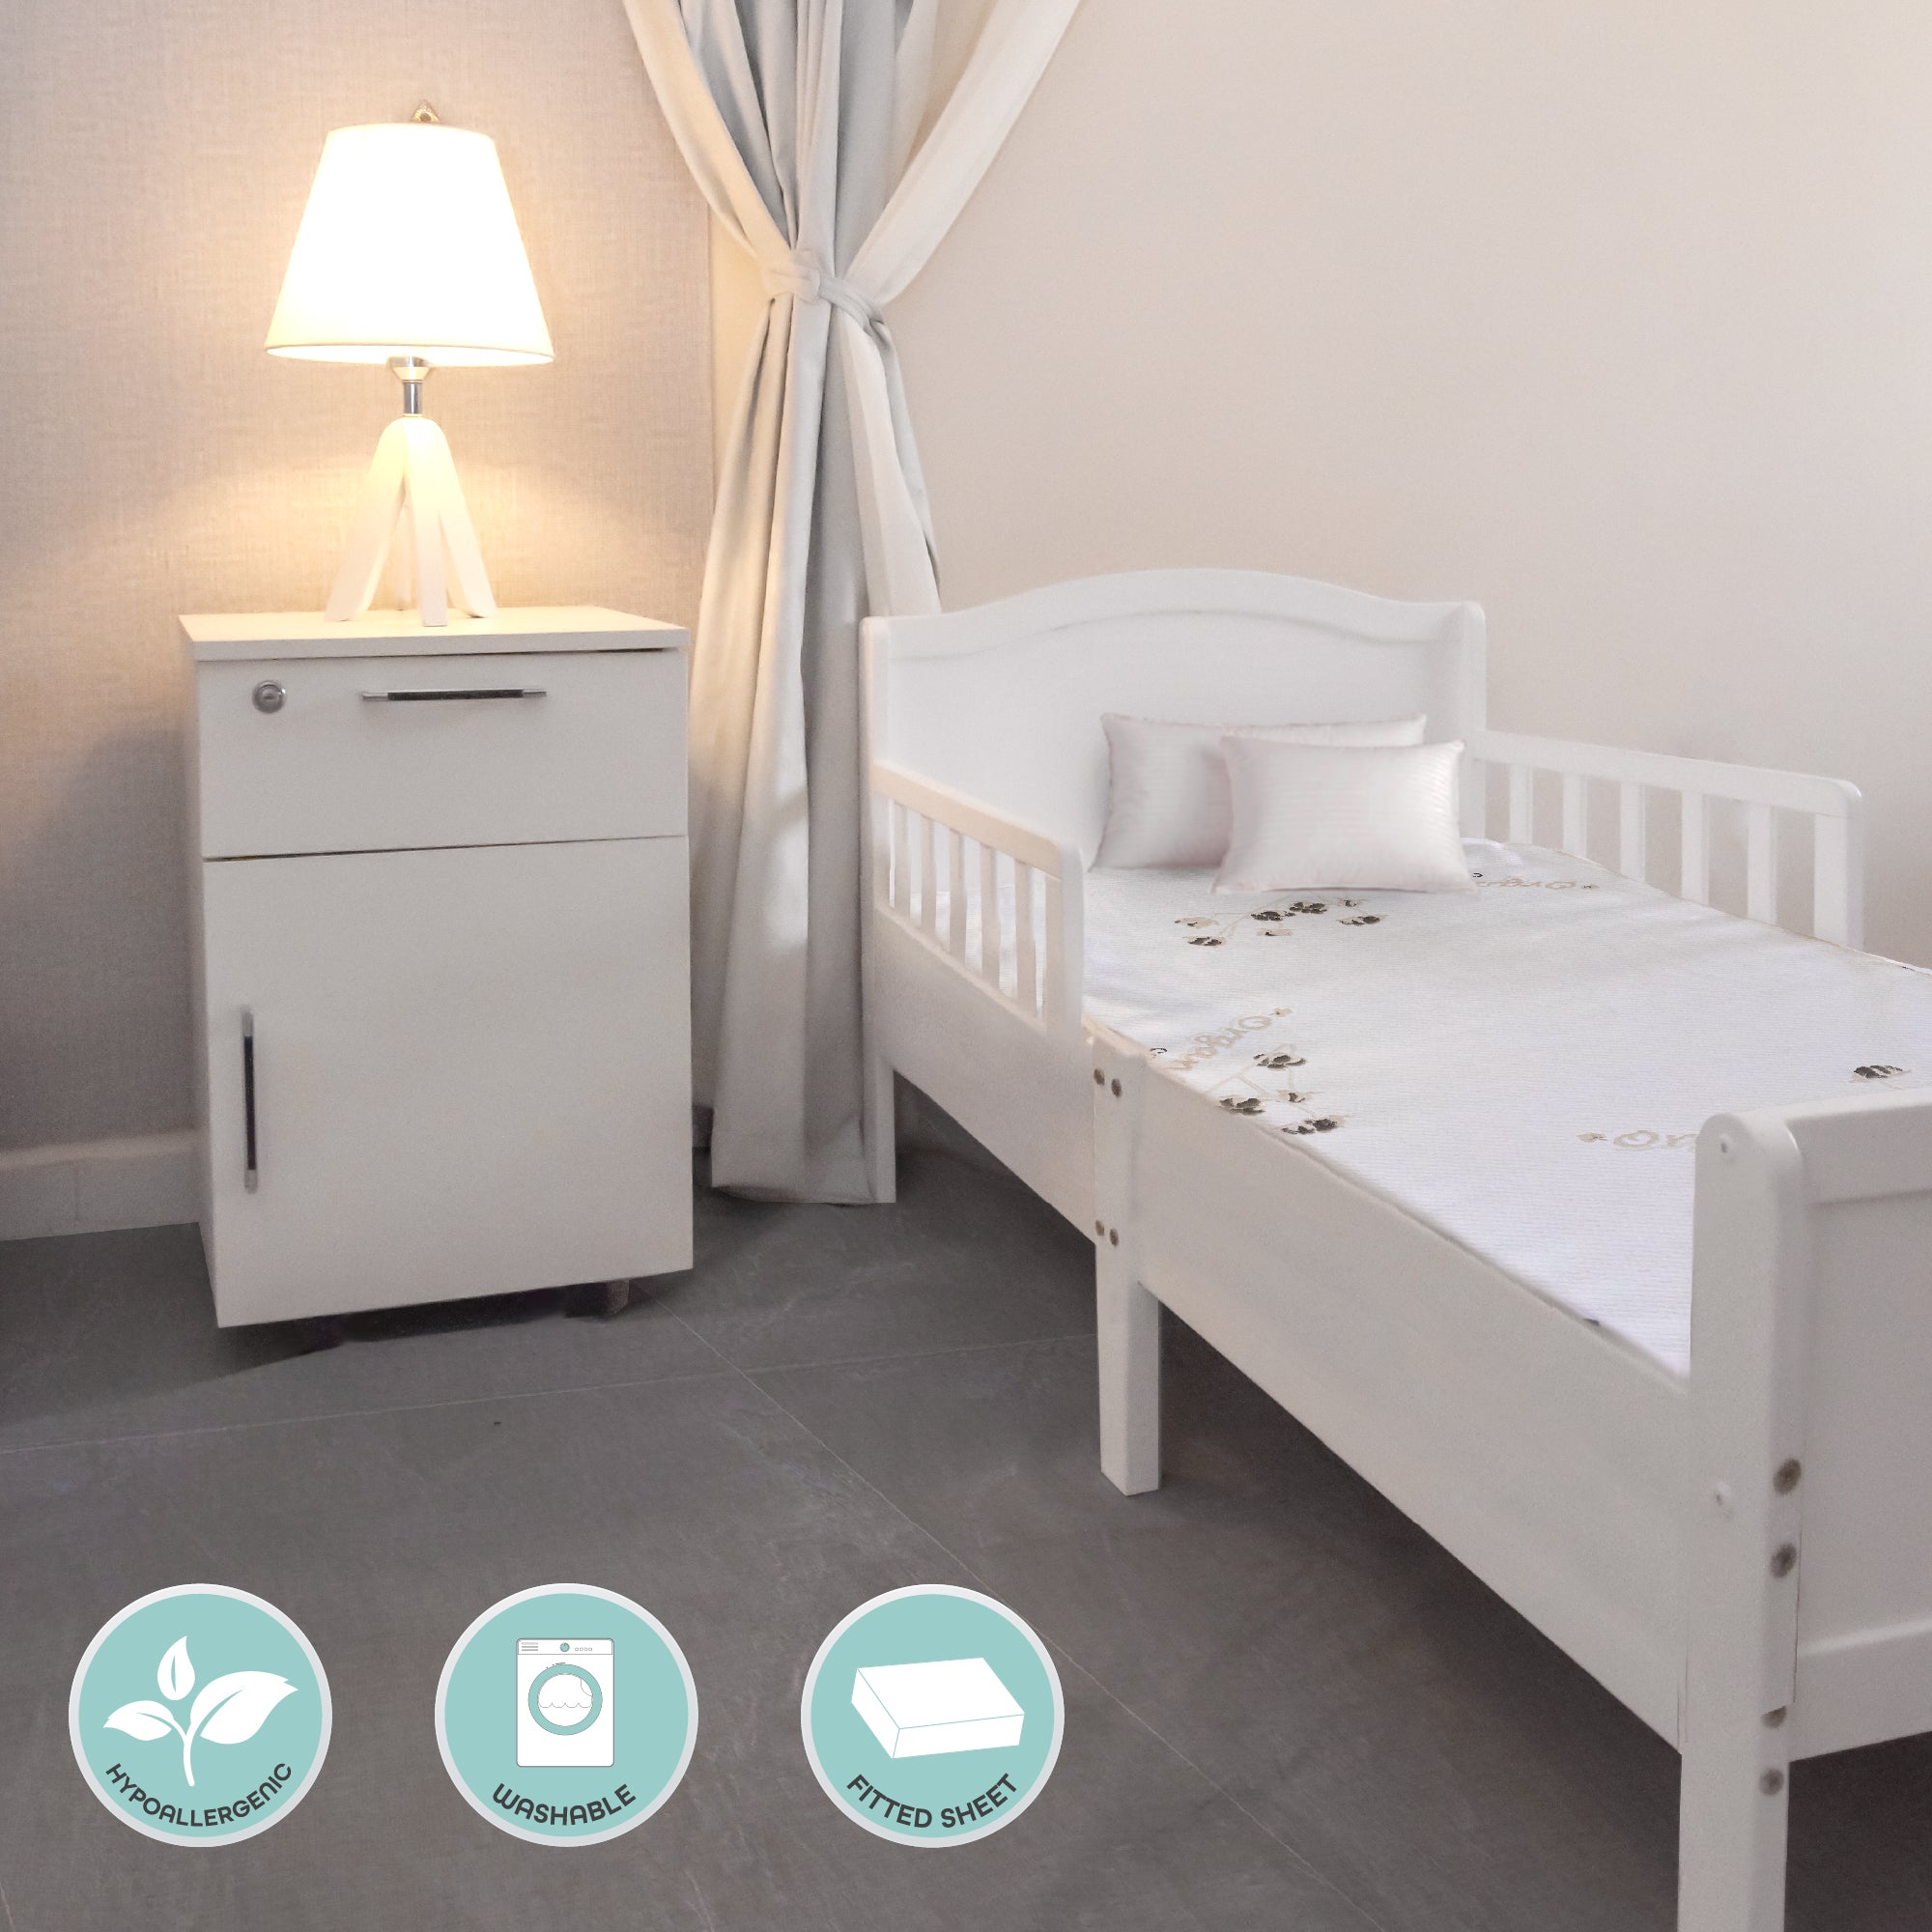 Moon - Organic Toddler Crib & bed mattress (140 x 70 x 10 cm)